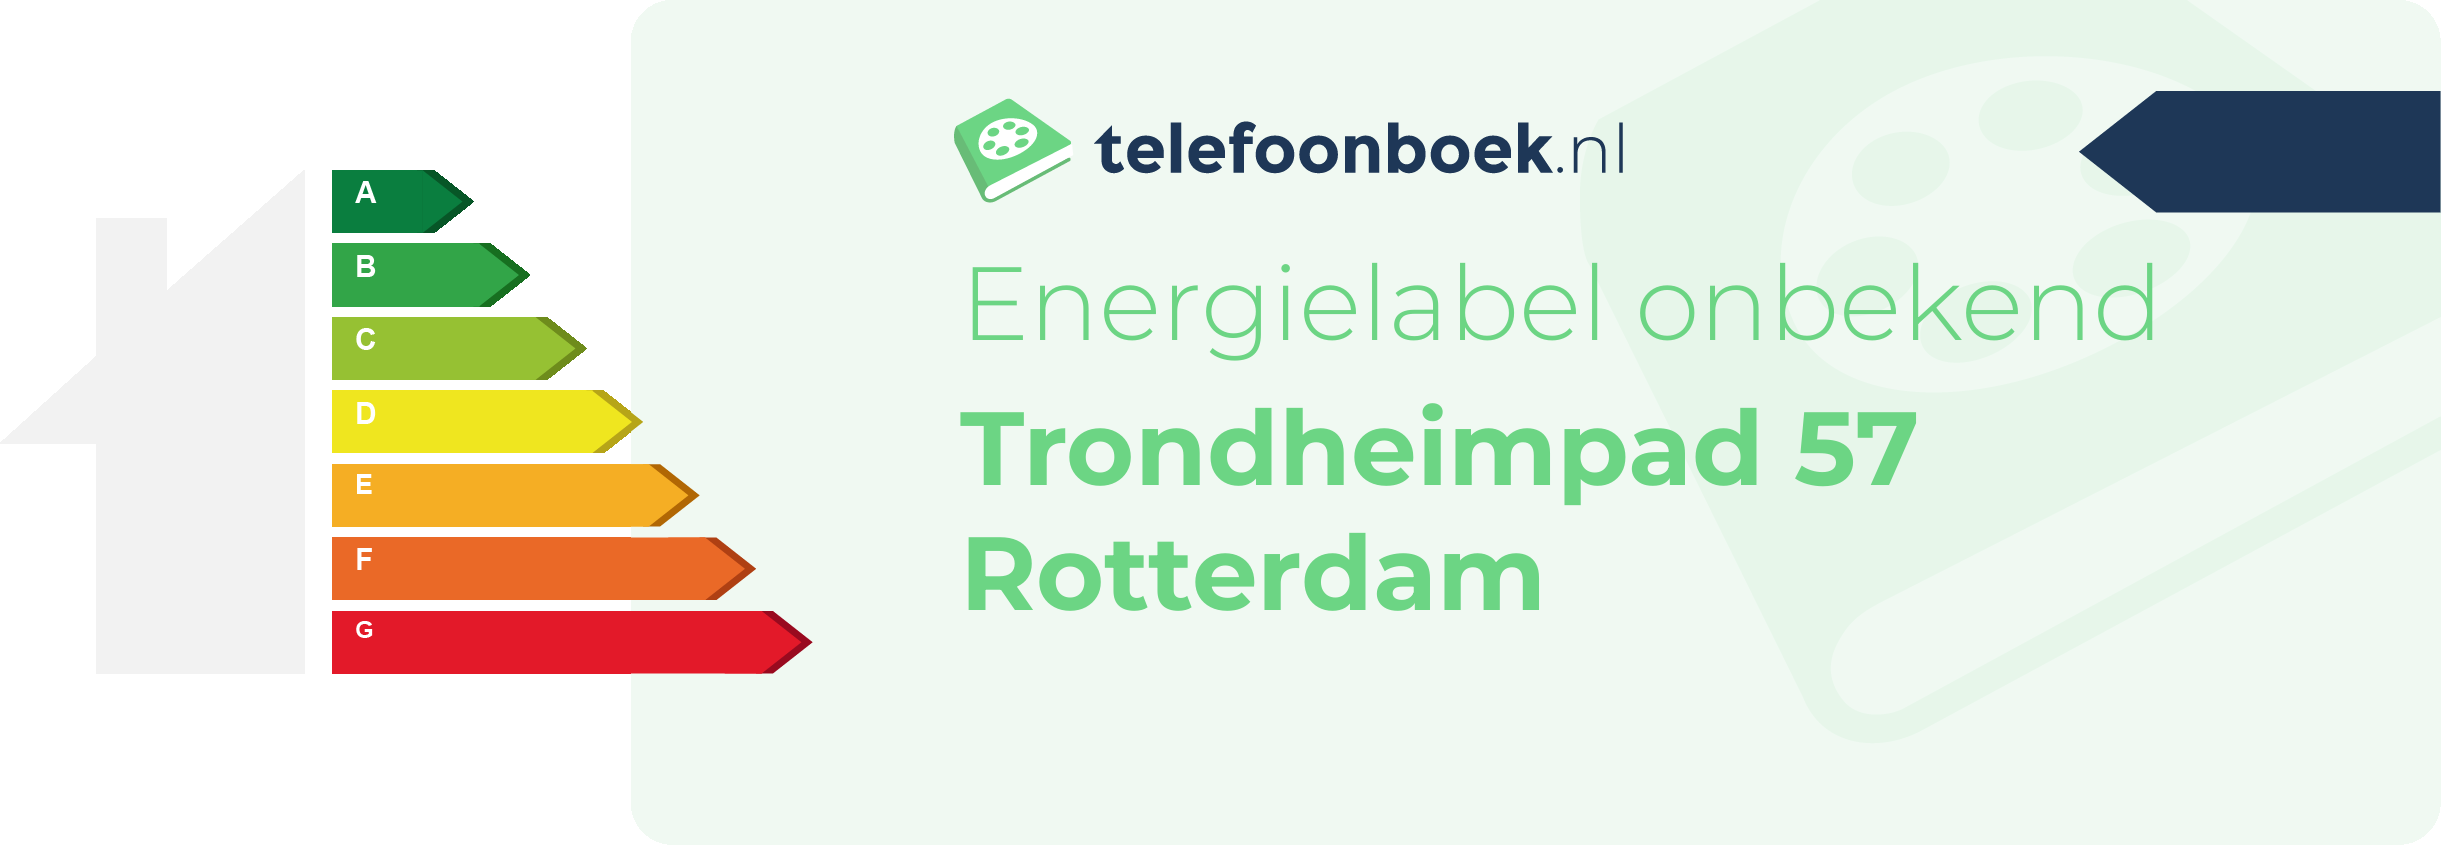 Energielabel Trondheimpad 57 Rotterdam